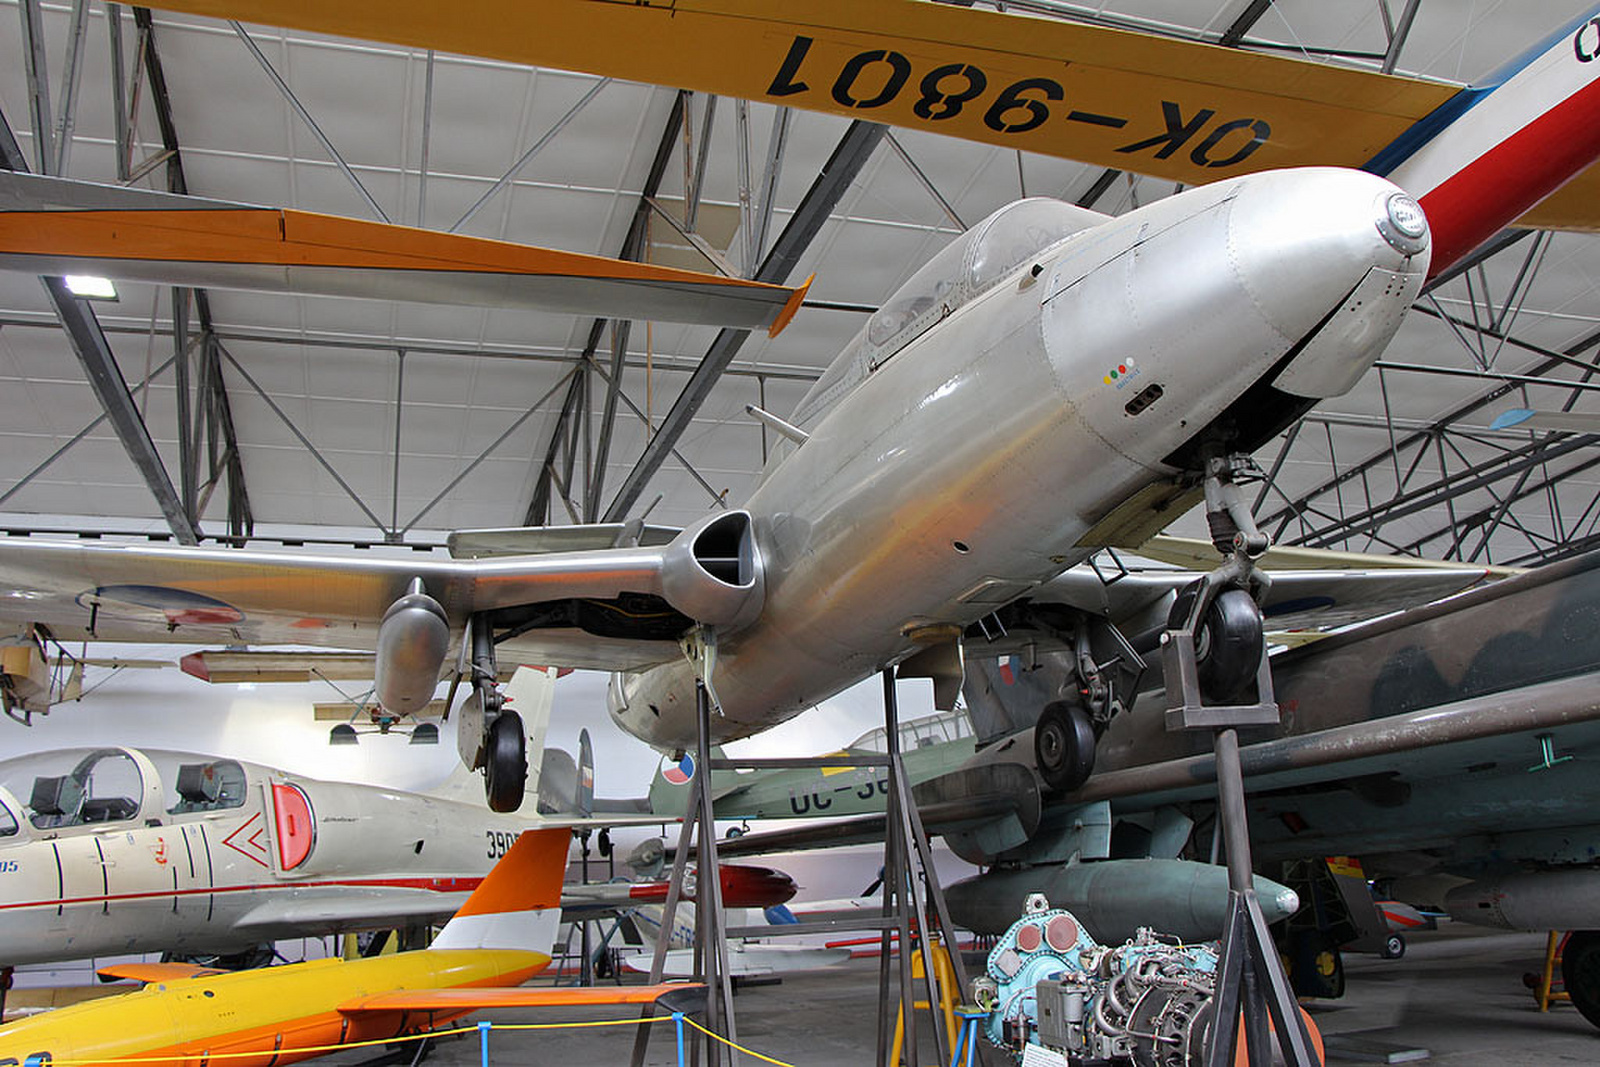 L-29 Delfin 1959 Repülőmúzeum